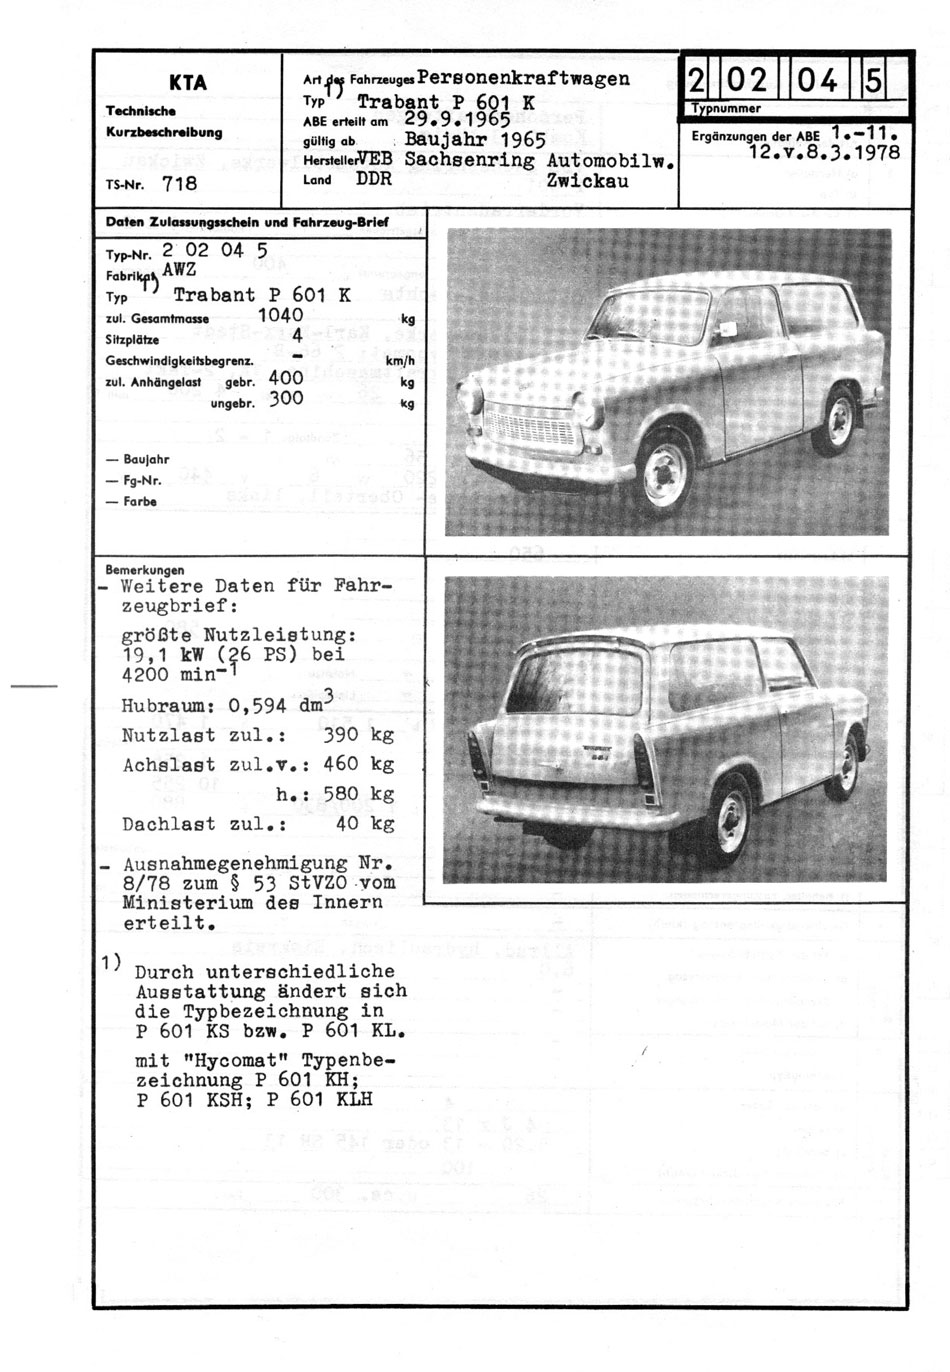 KTA-Datenblatt - P 601 K Seite 1